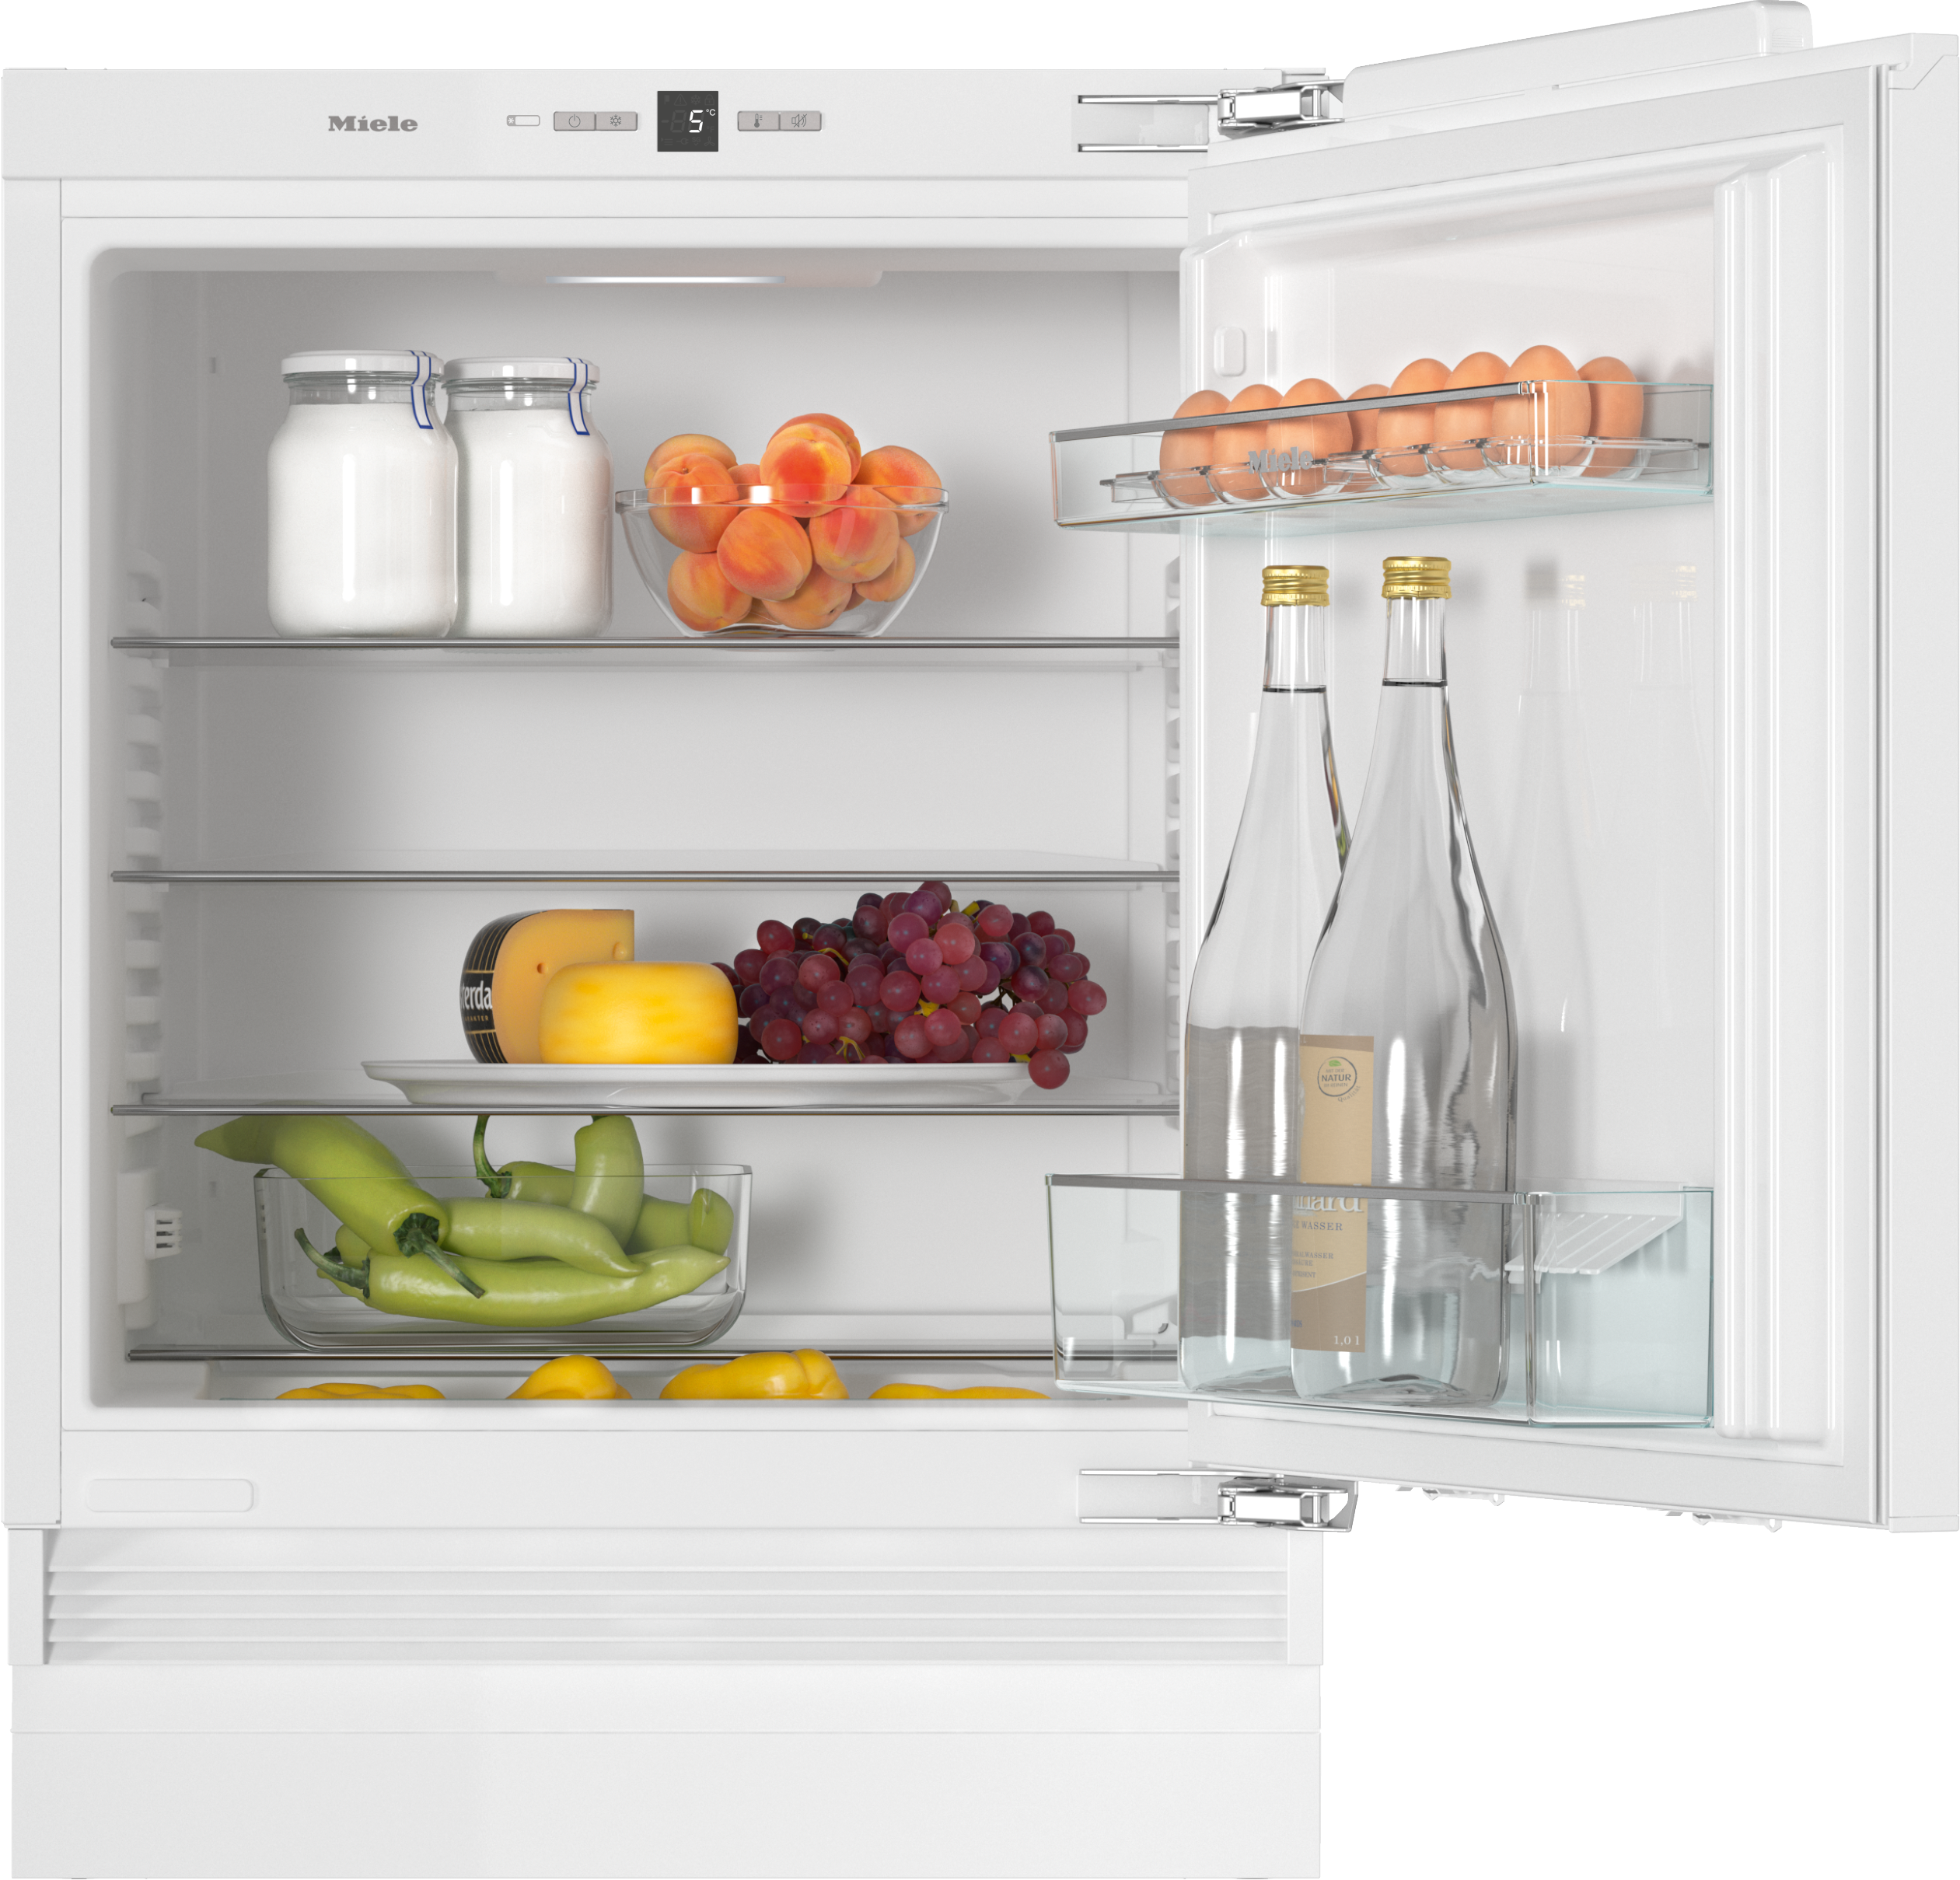 - K Refrigerators – 31222 Ui Miele freezers and